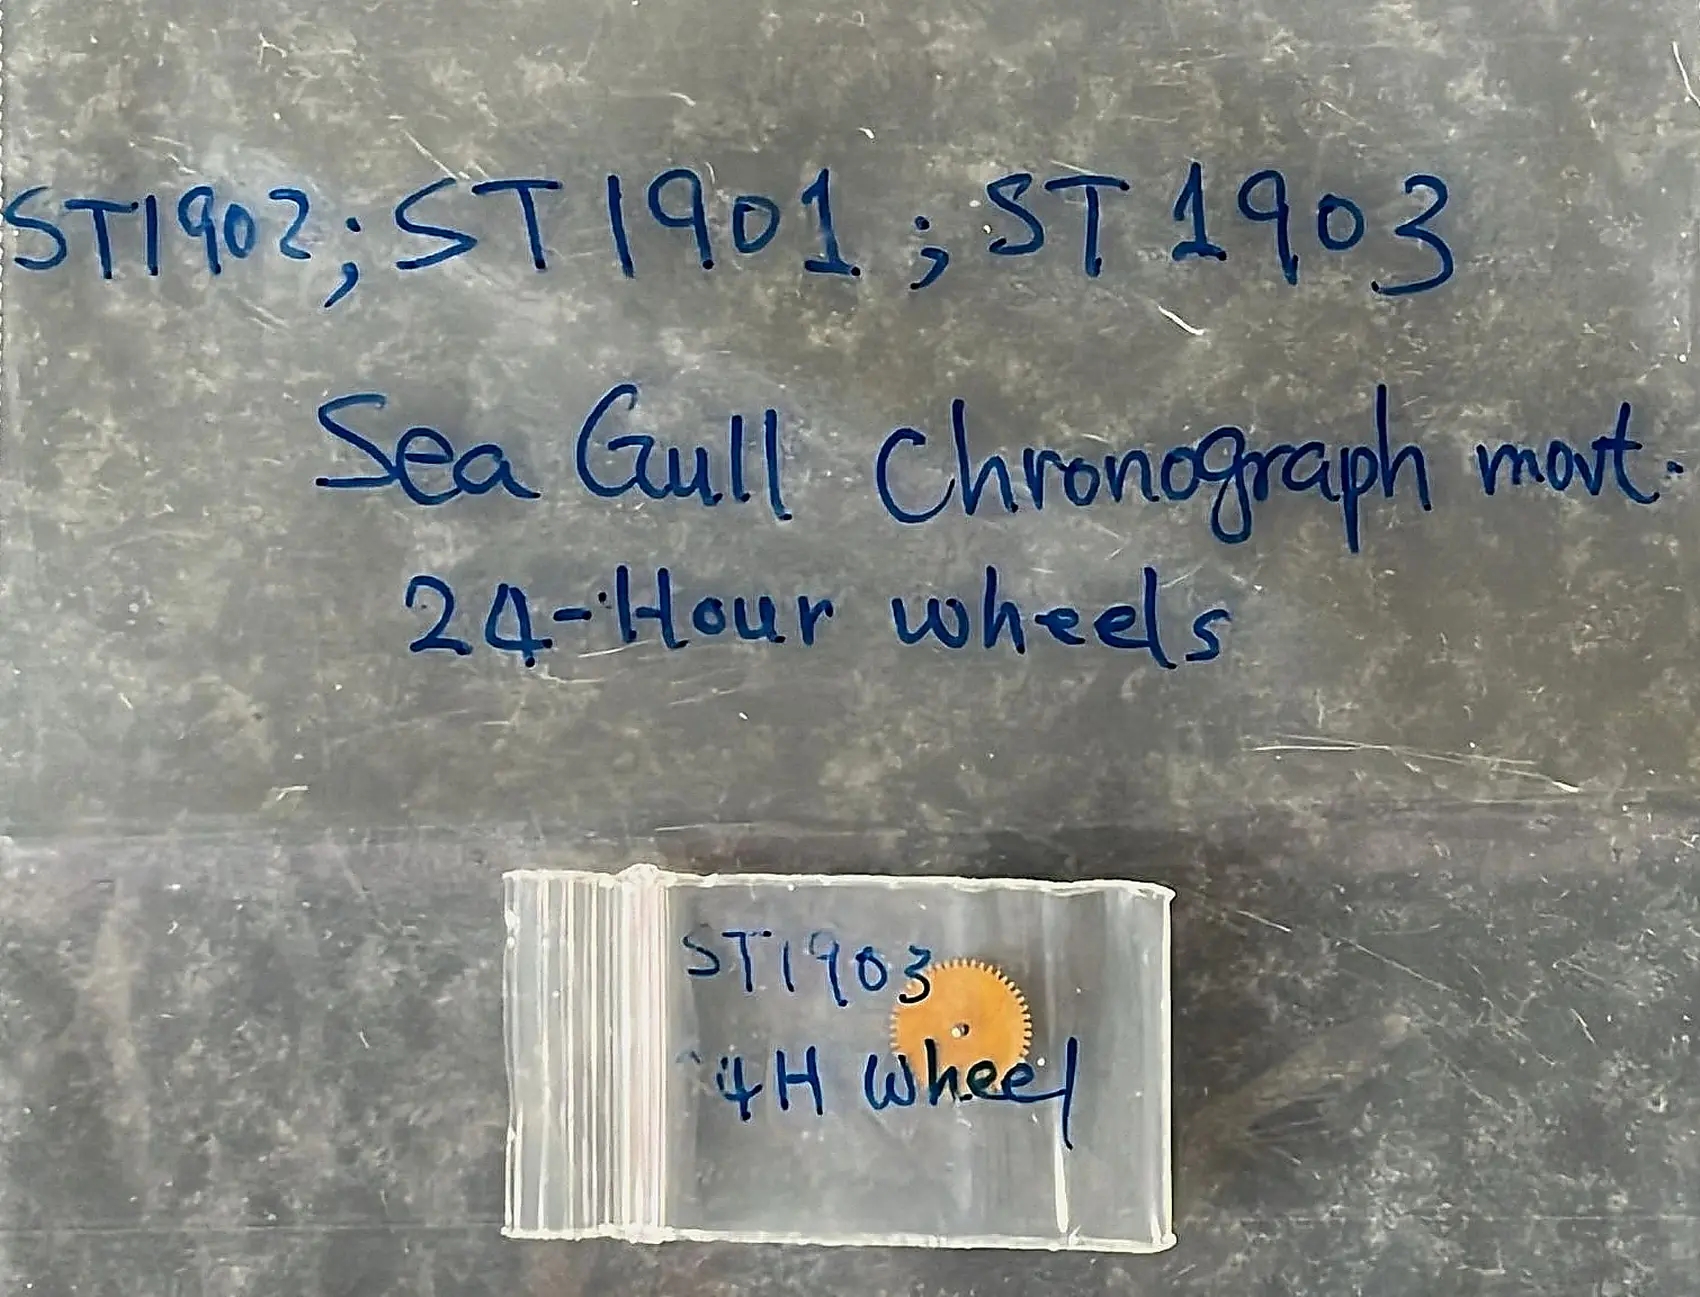 24 hour wheel for Sea Gull ST1901, ST1902, ST1903 chronograph 